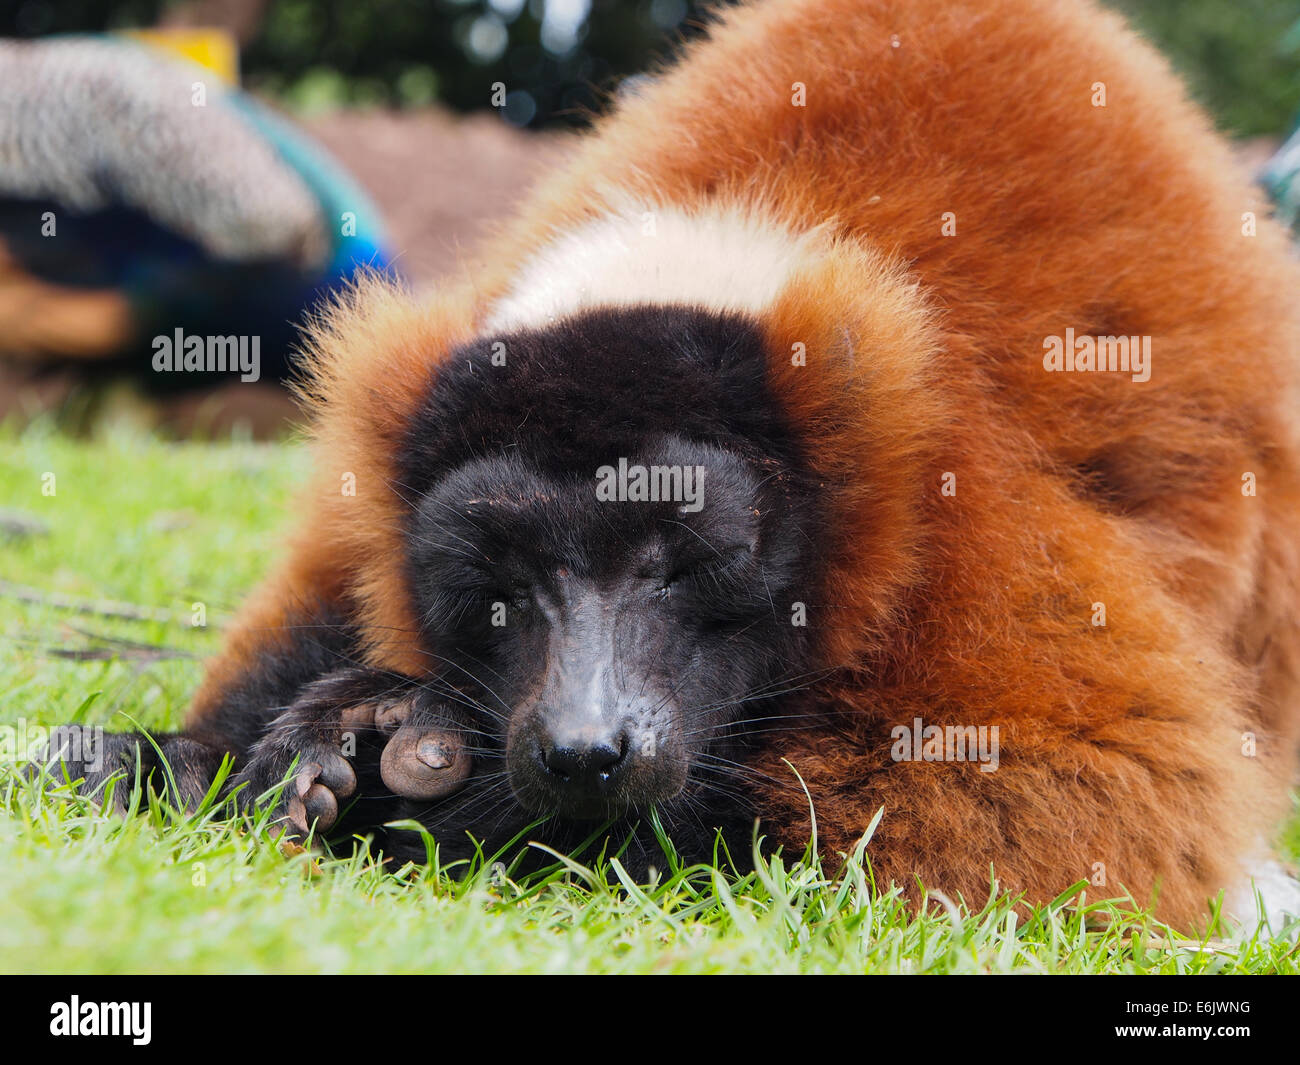 Red Ruffed Lemur sleeping on the grass Stock Photo